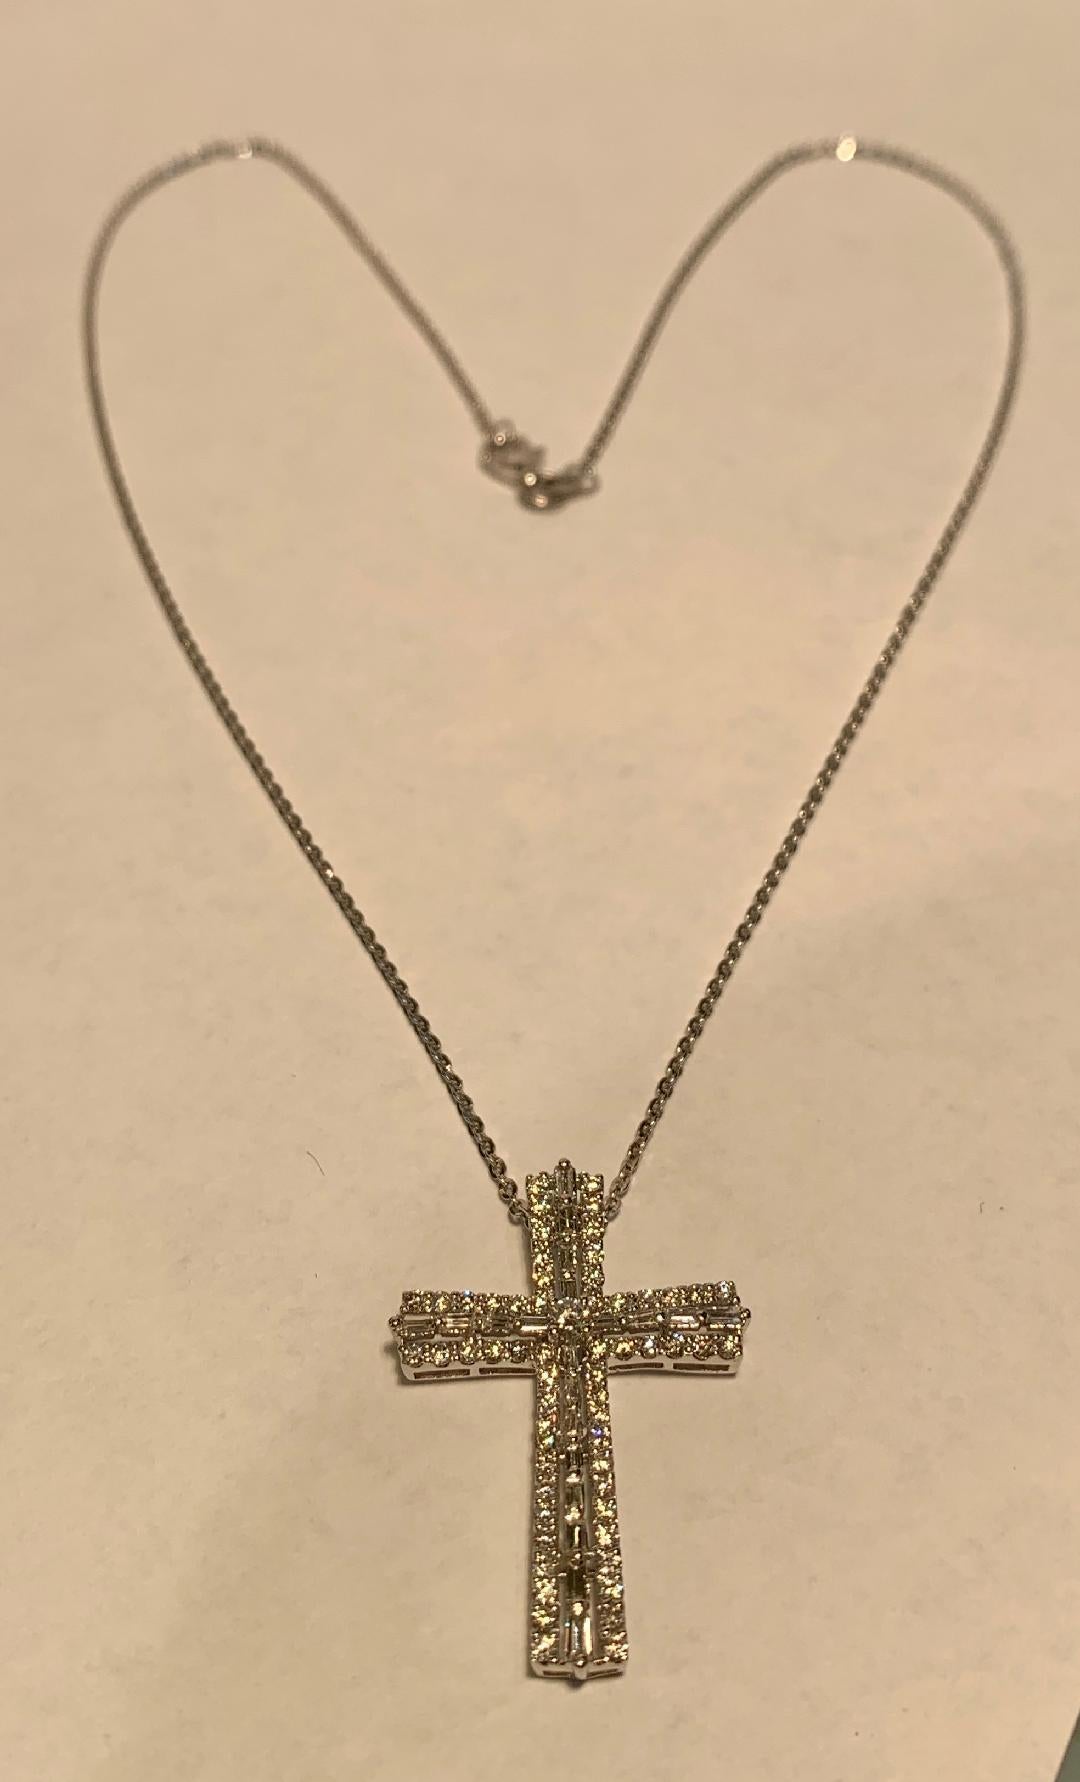 Heavenly 1.25 Carat Diamond Cross Pendant in 18K White Gold on White Gold Chain 2